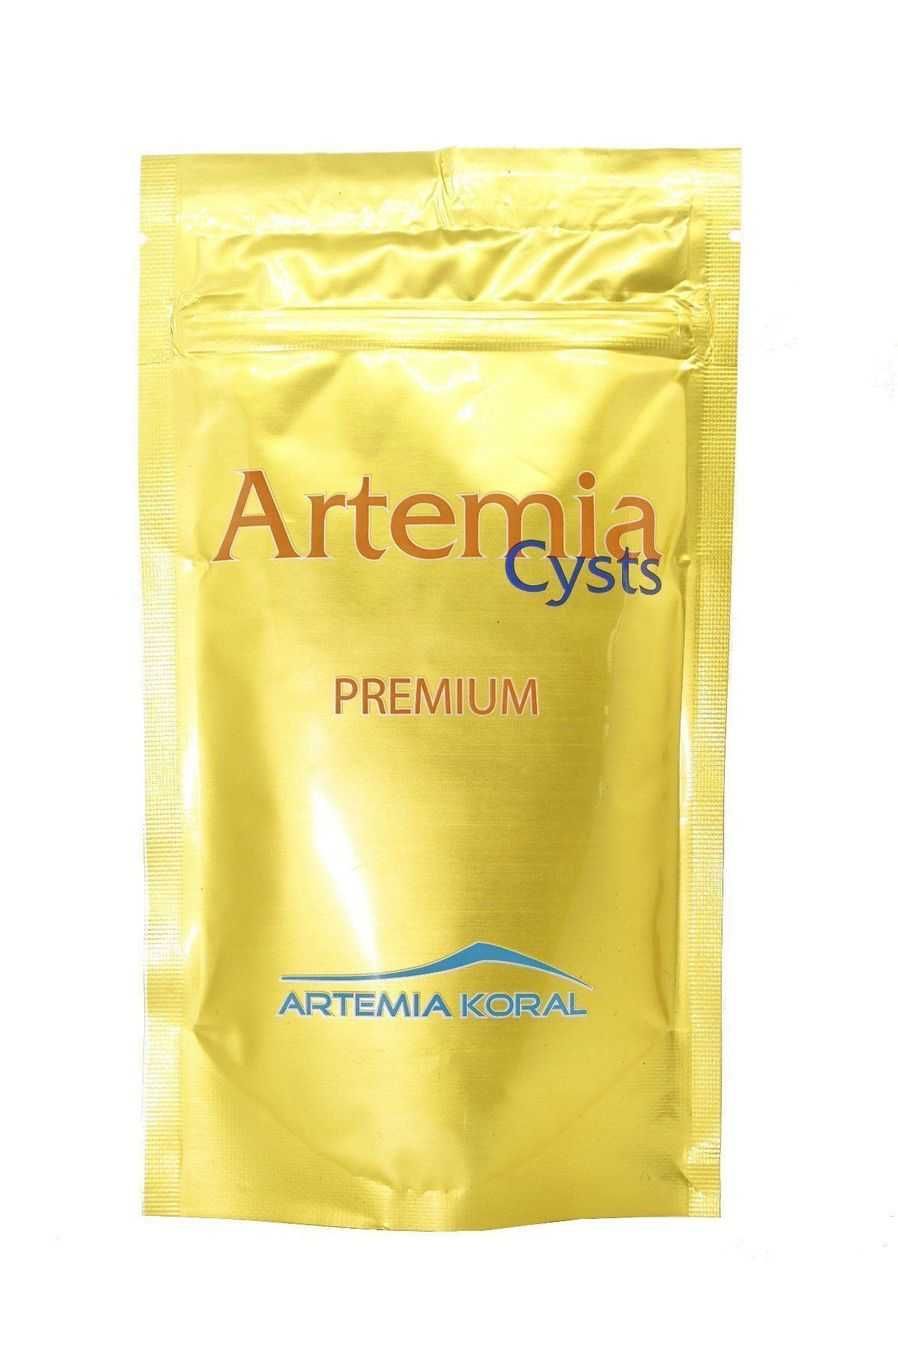 Koral artemia cysts PREMIUM +95%, 100g.